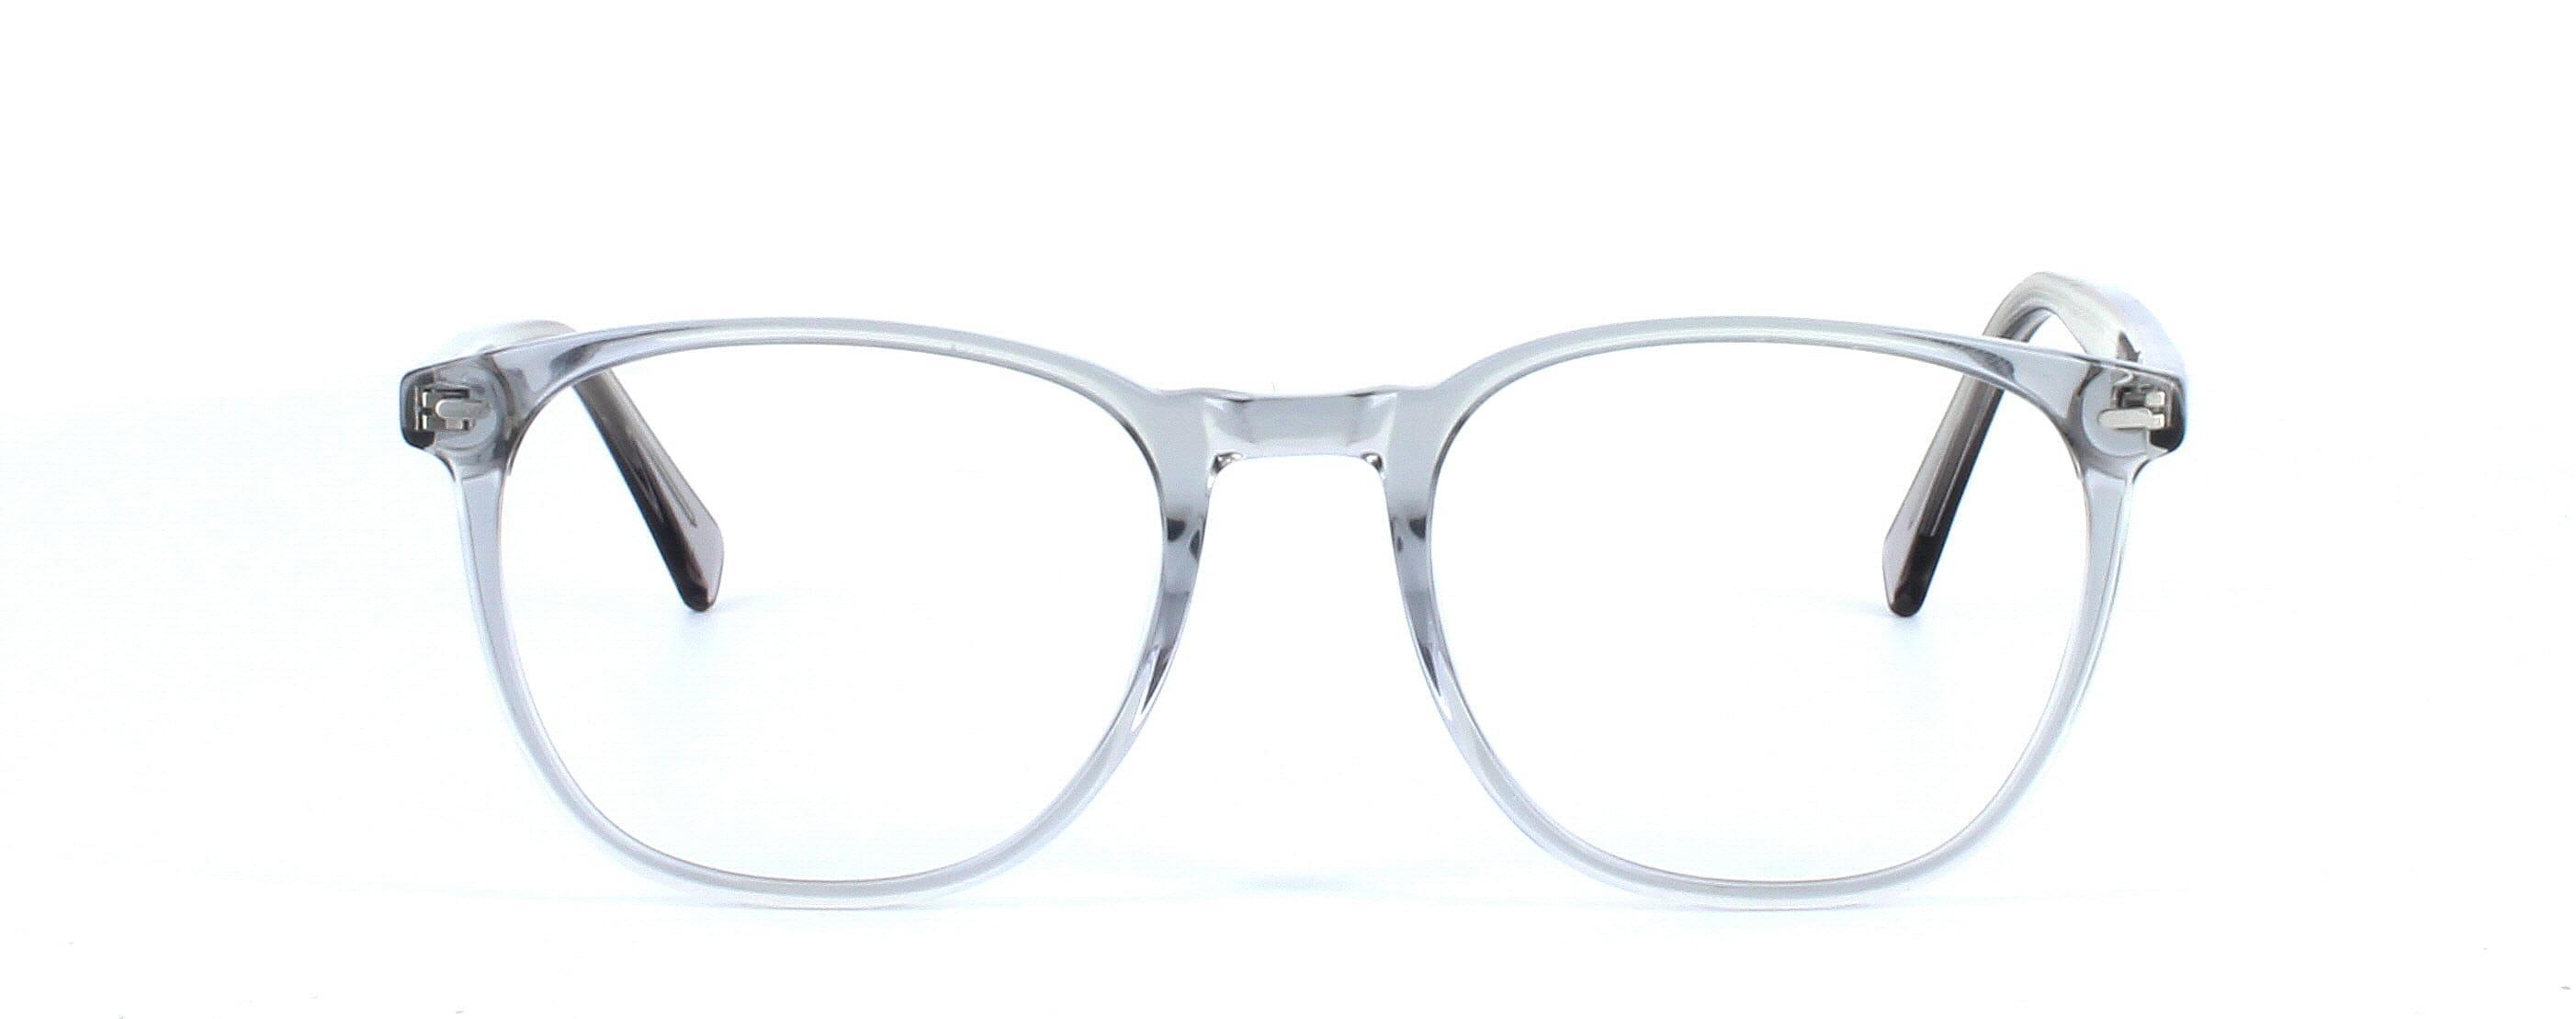 Hercules - Unisex plastic glasses frame - Crystal grey - image view 5